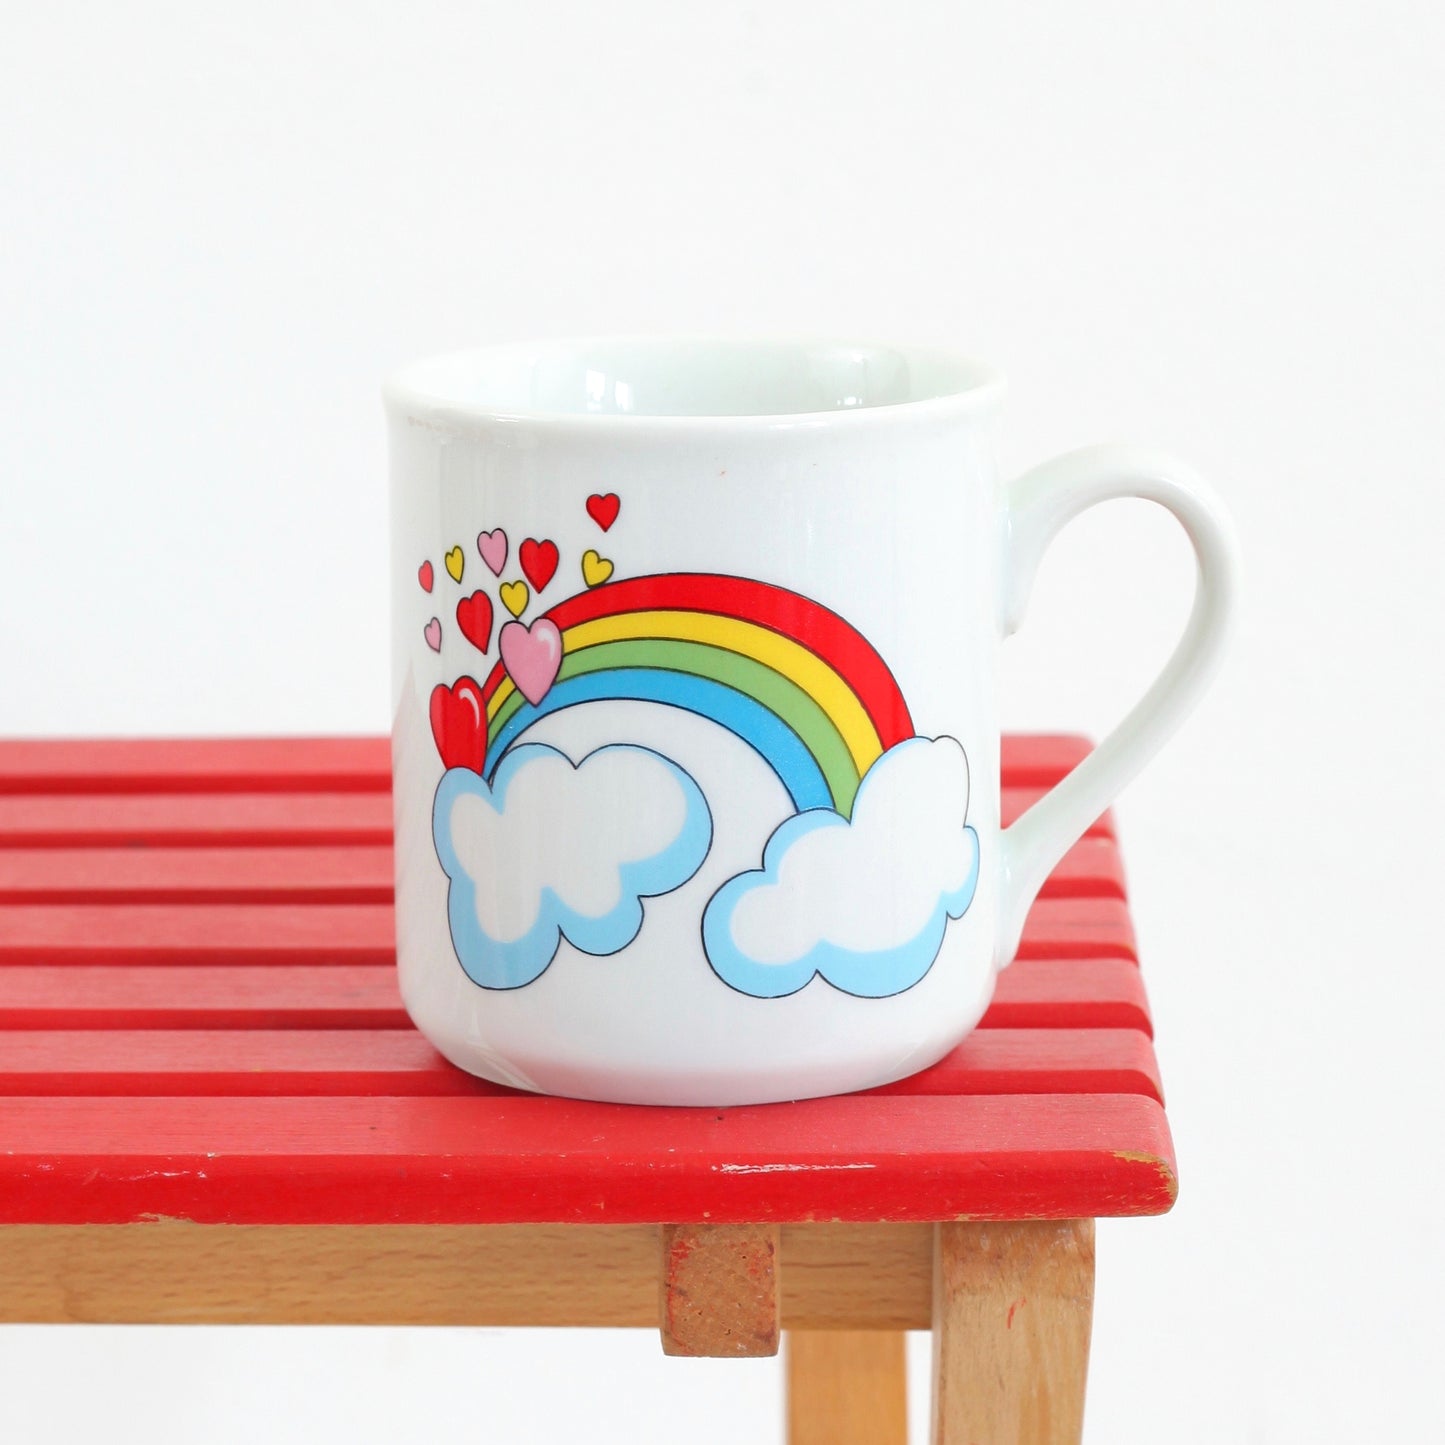 SOLD - Kitschy Vintage Rainbow Mug